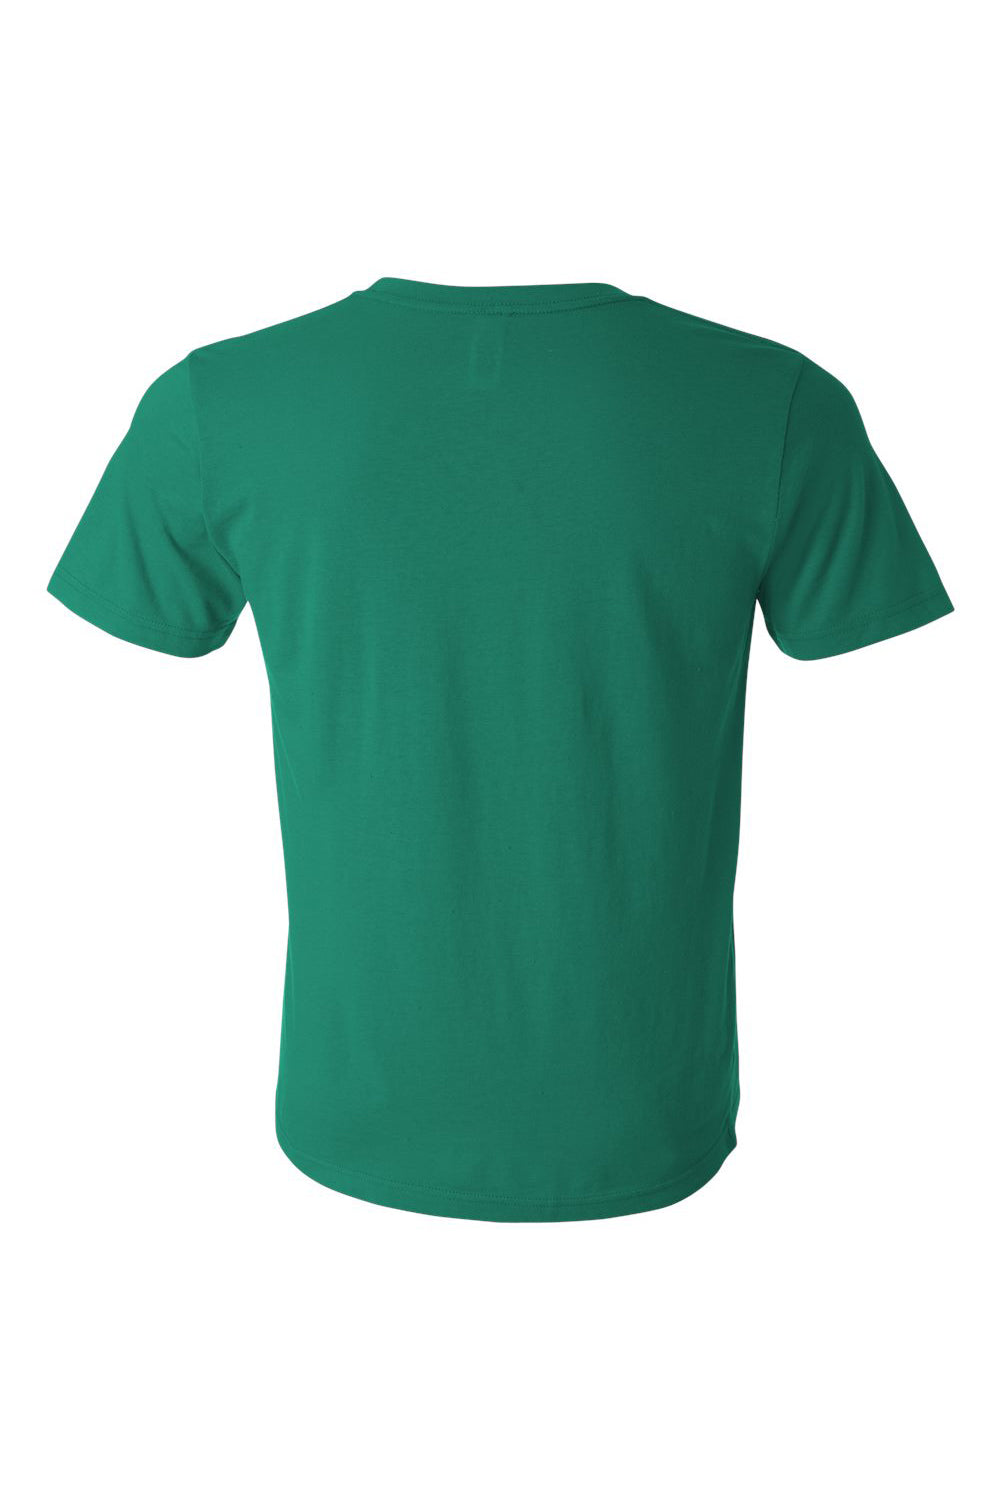 Bella + Canvas BC3650/3650 Mens Short Sleeve Crewneck T-Shirt Kelly Green Flat Back